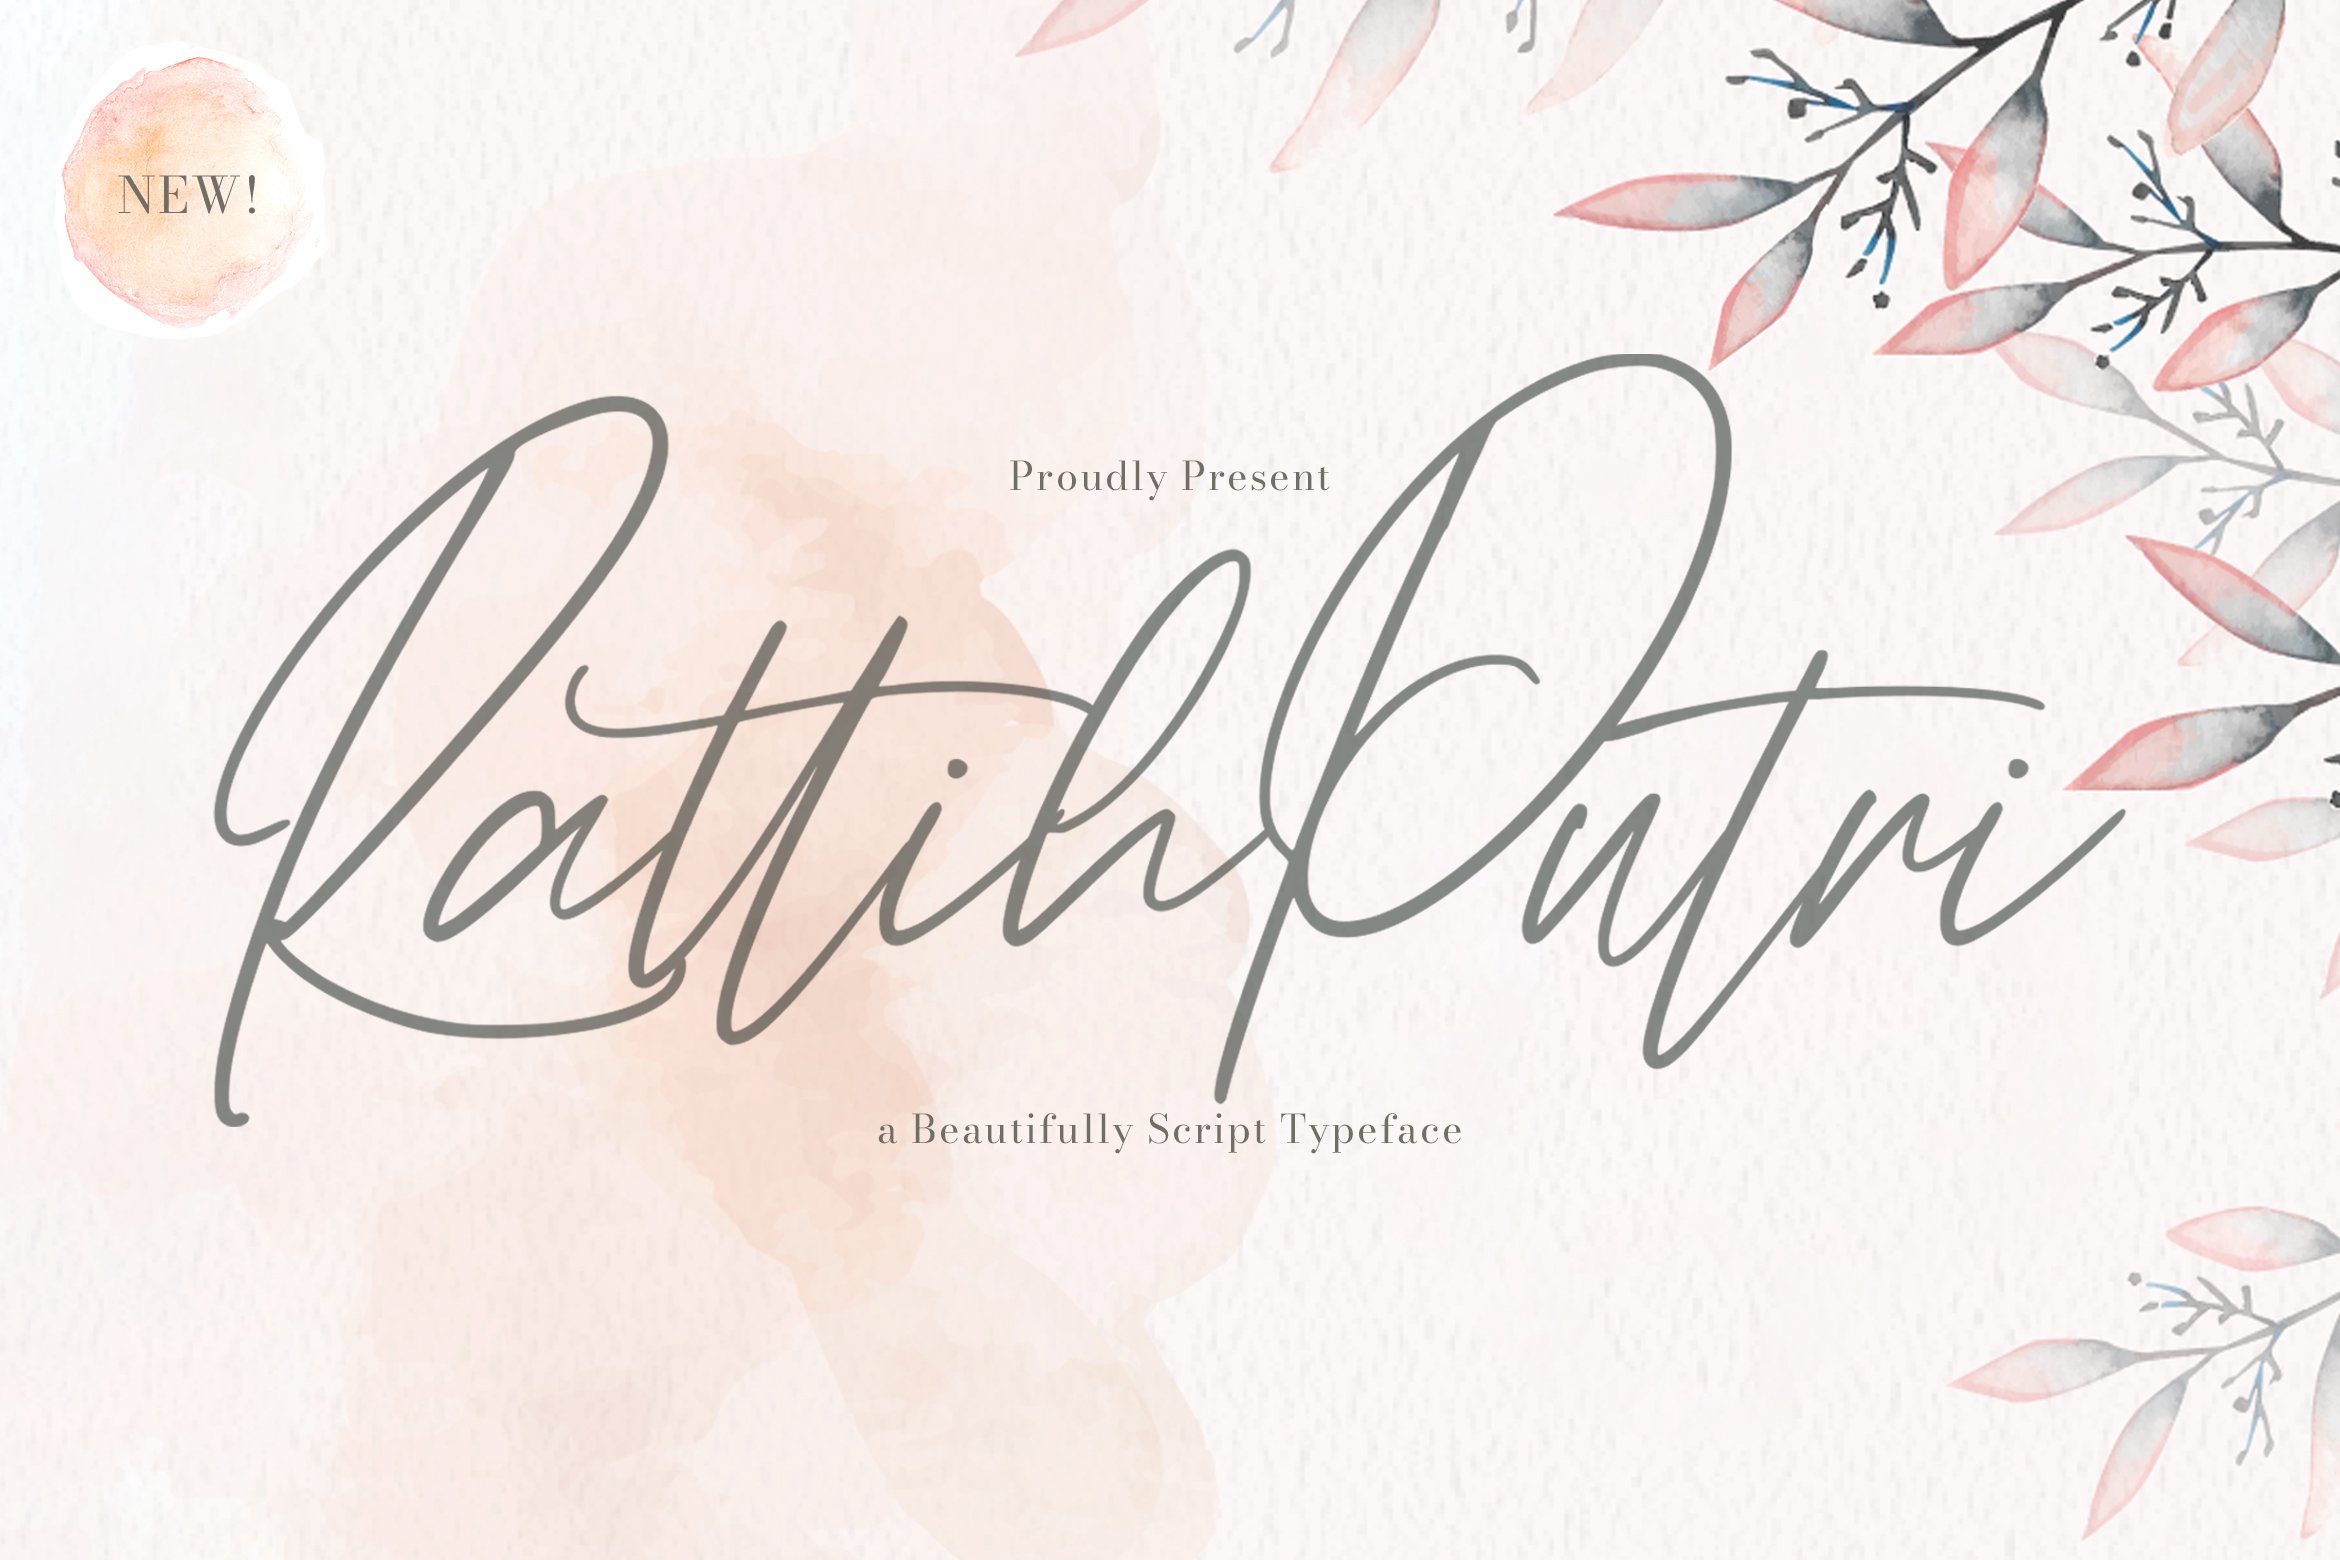 Rattih Putri - Handwritten Font cover image.